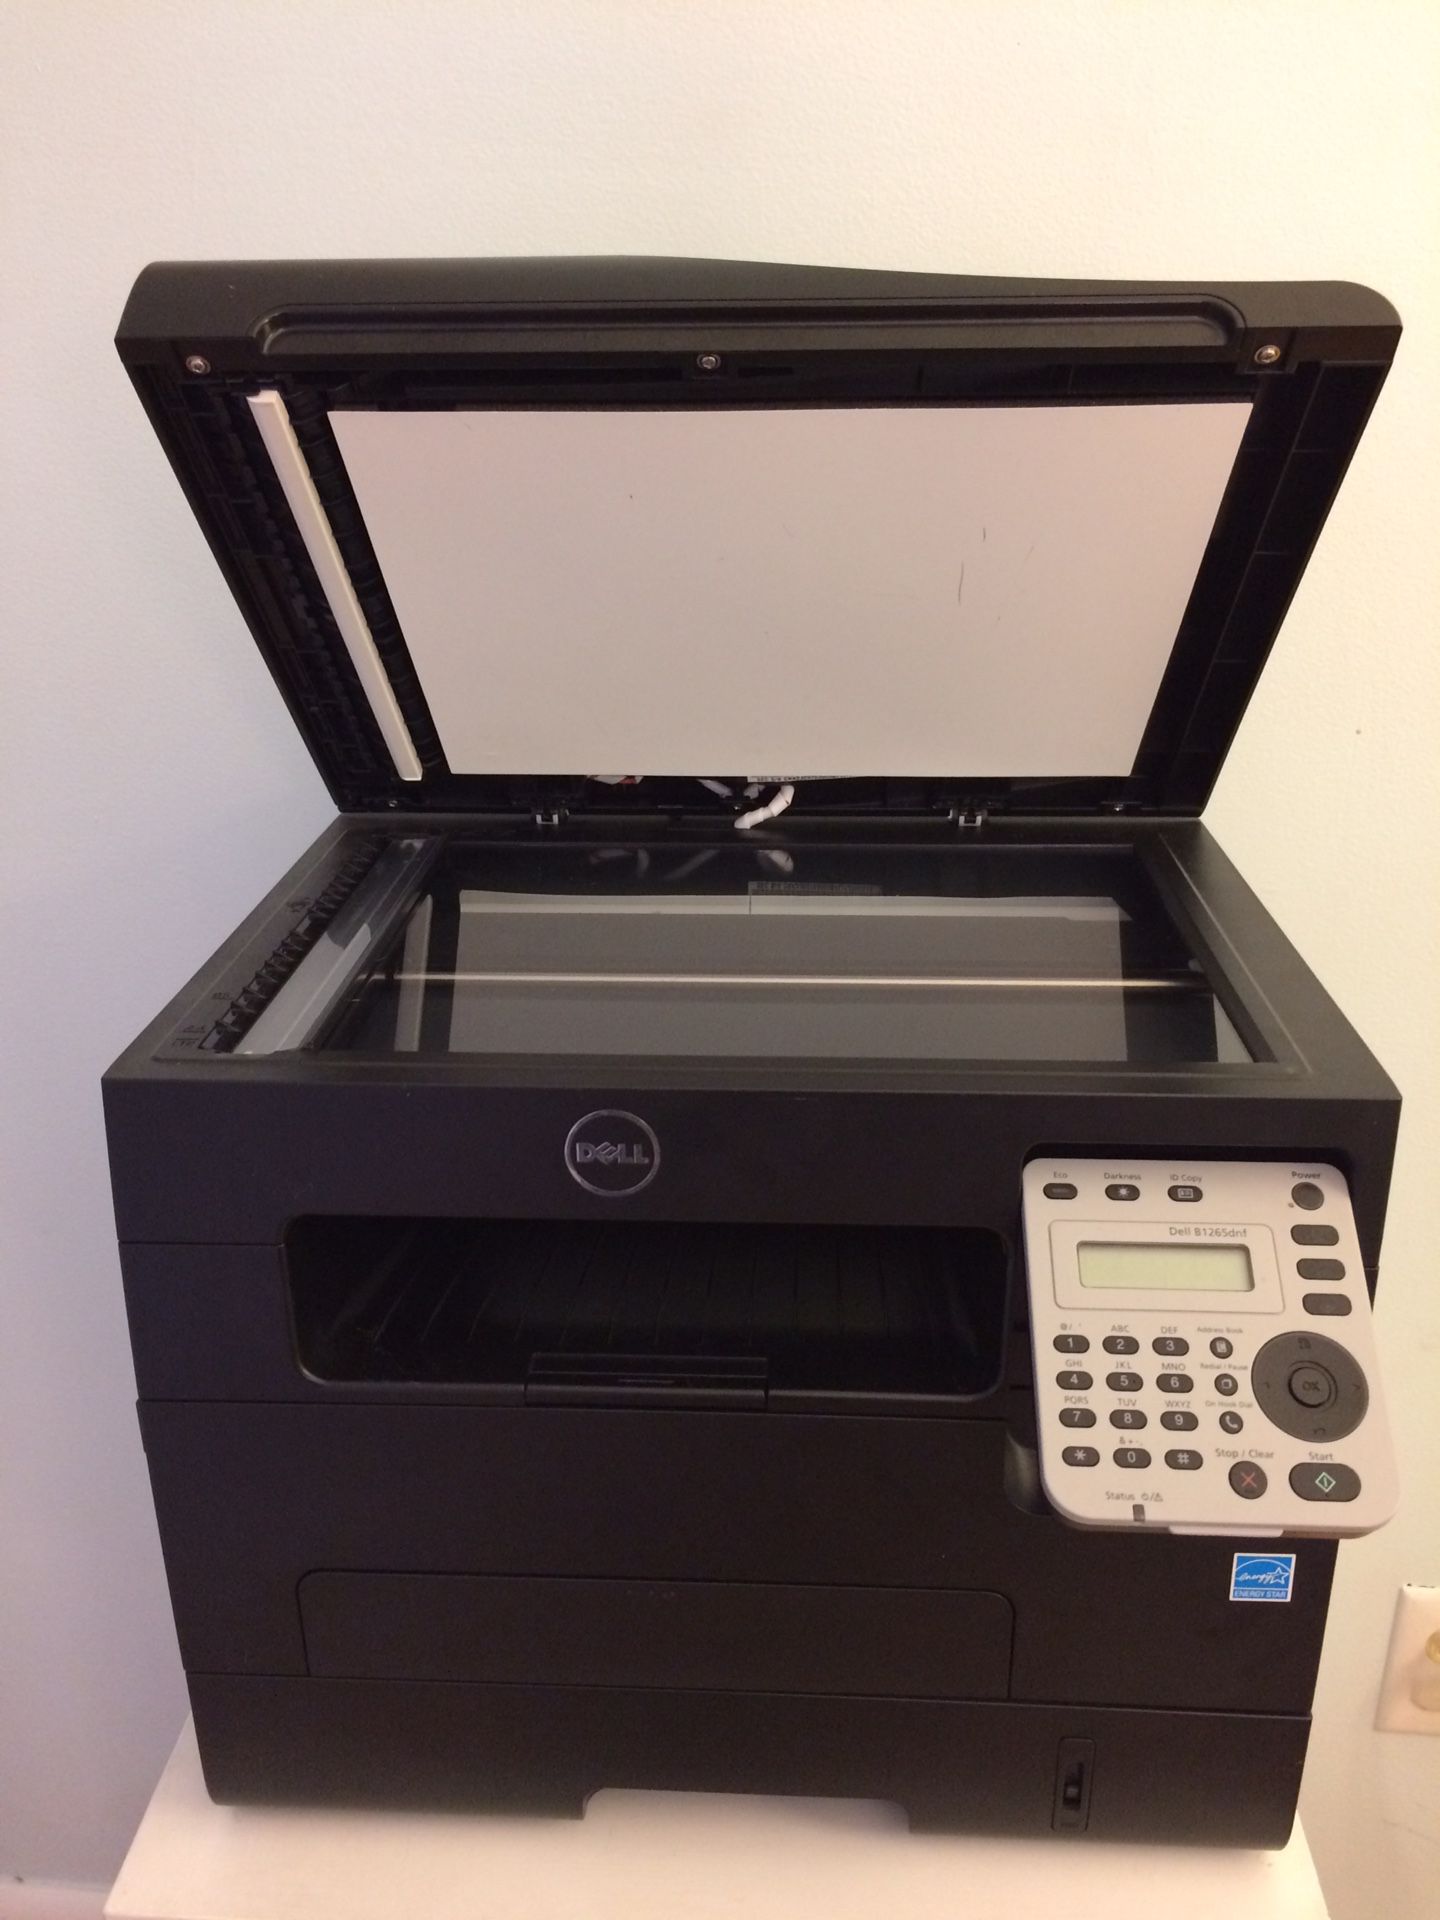 Dell printer scanner copier